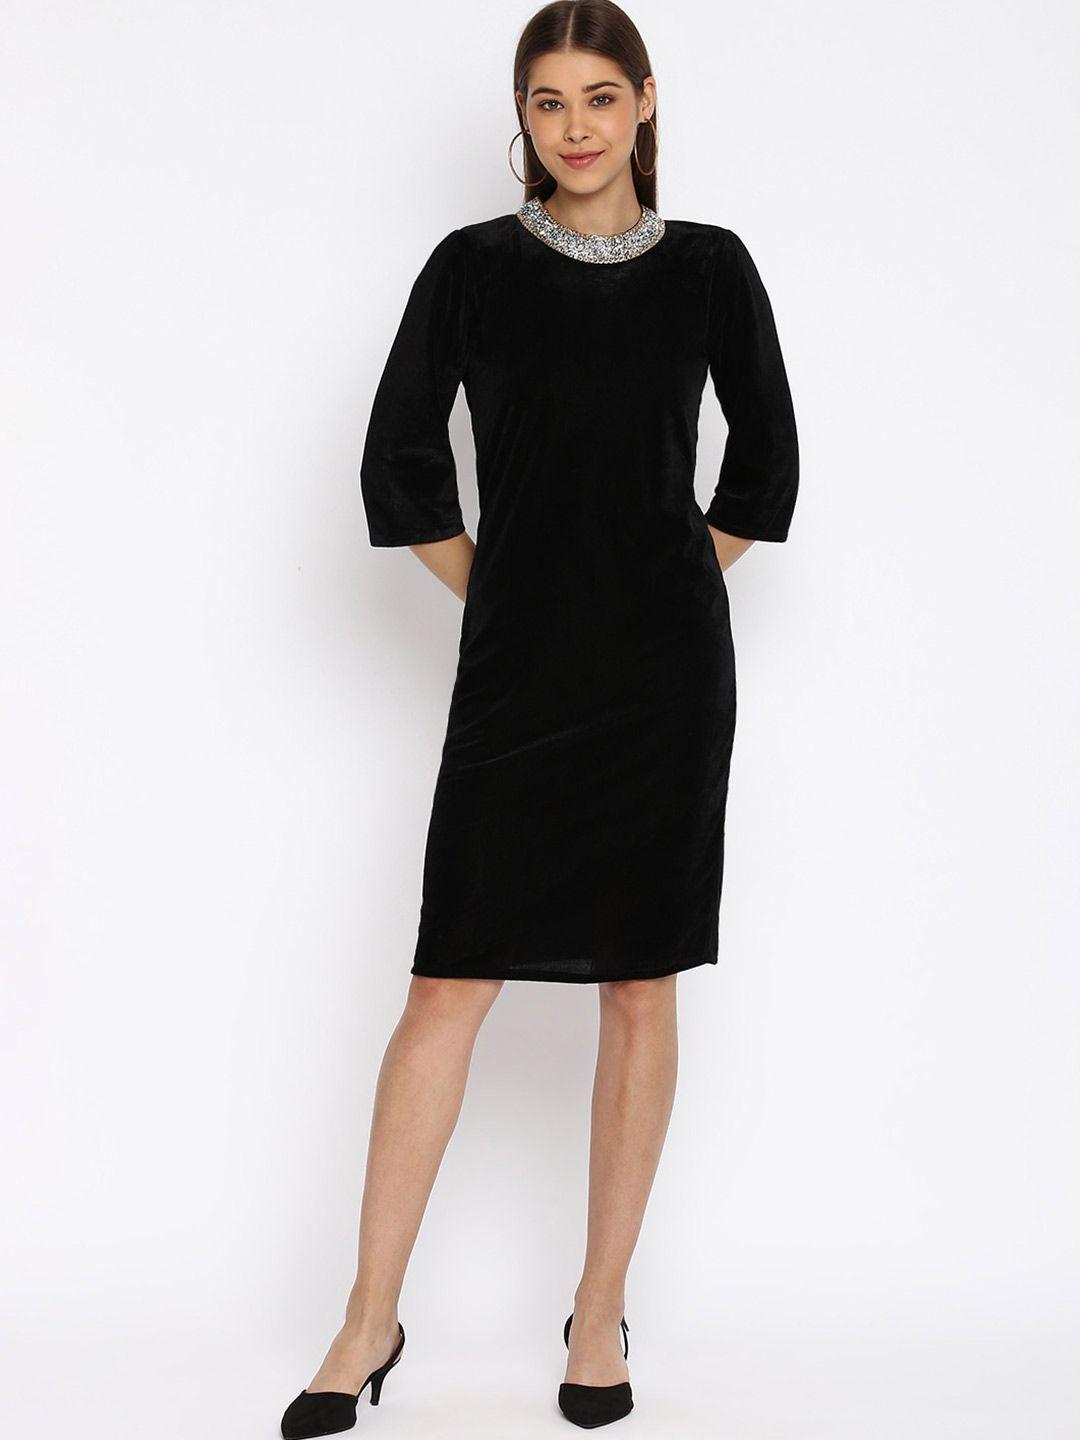 mayra black velvet sheath dress